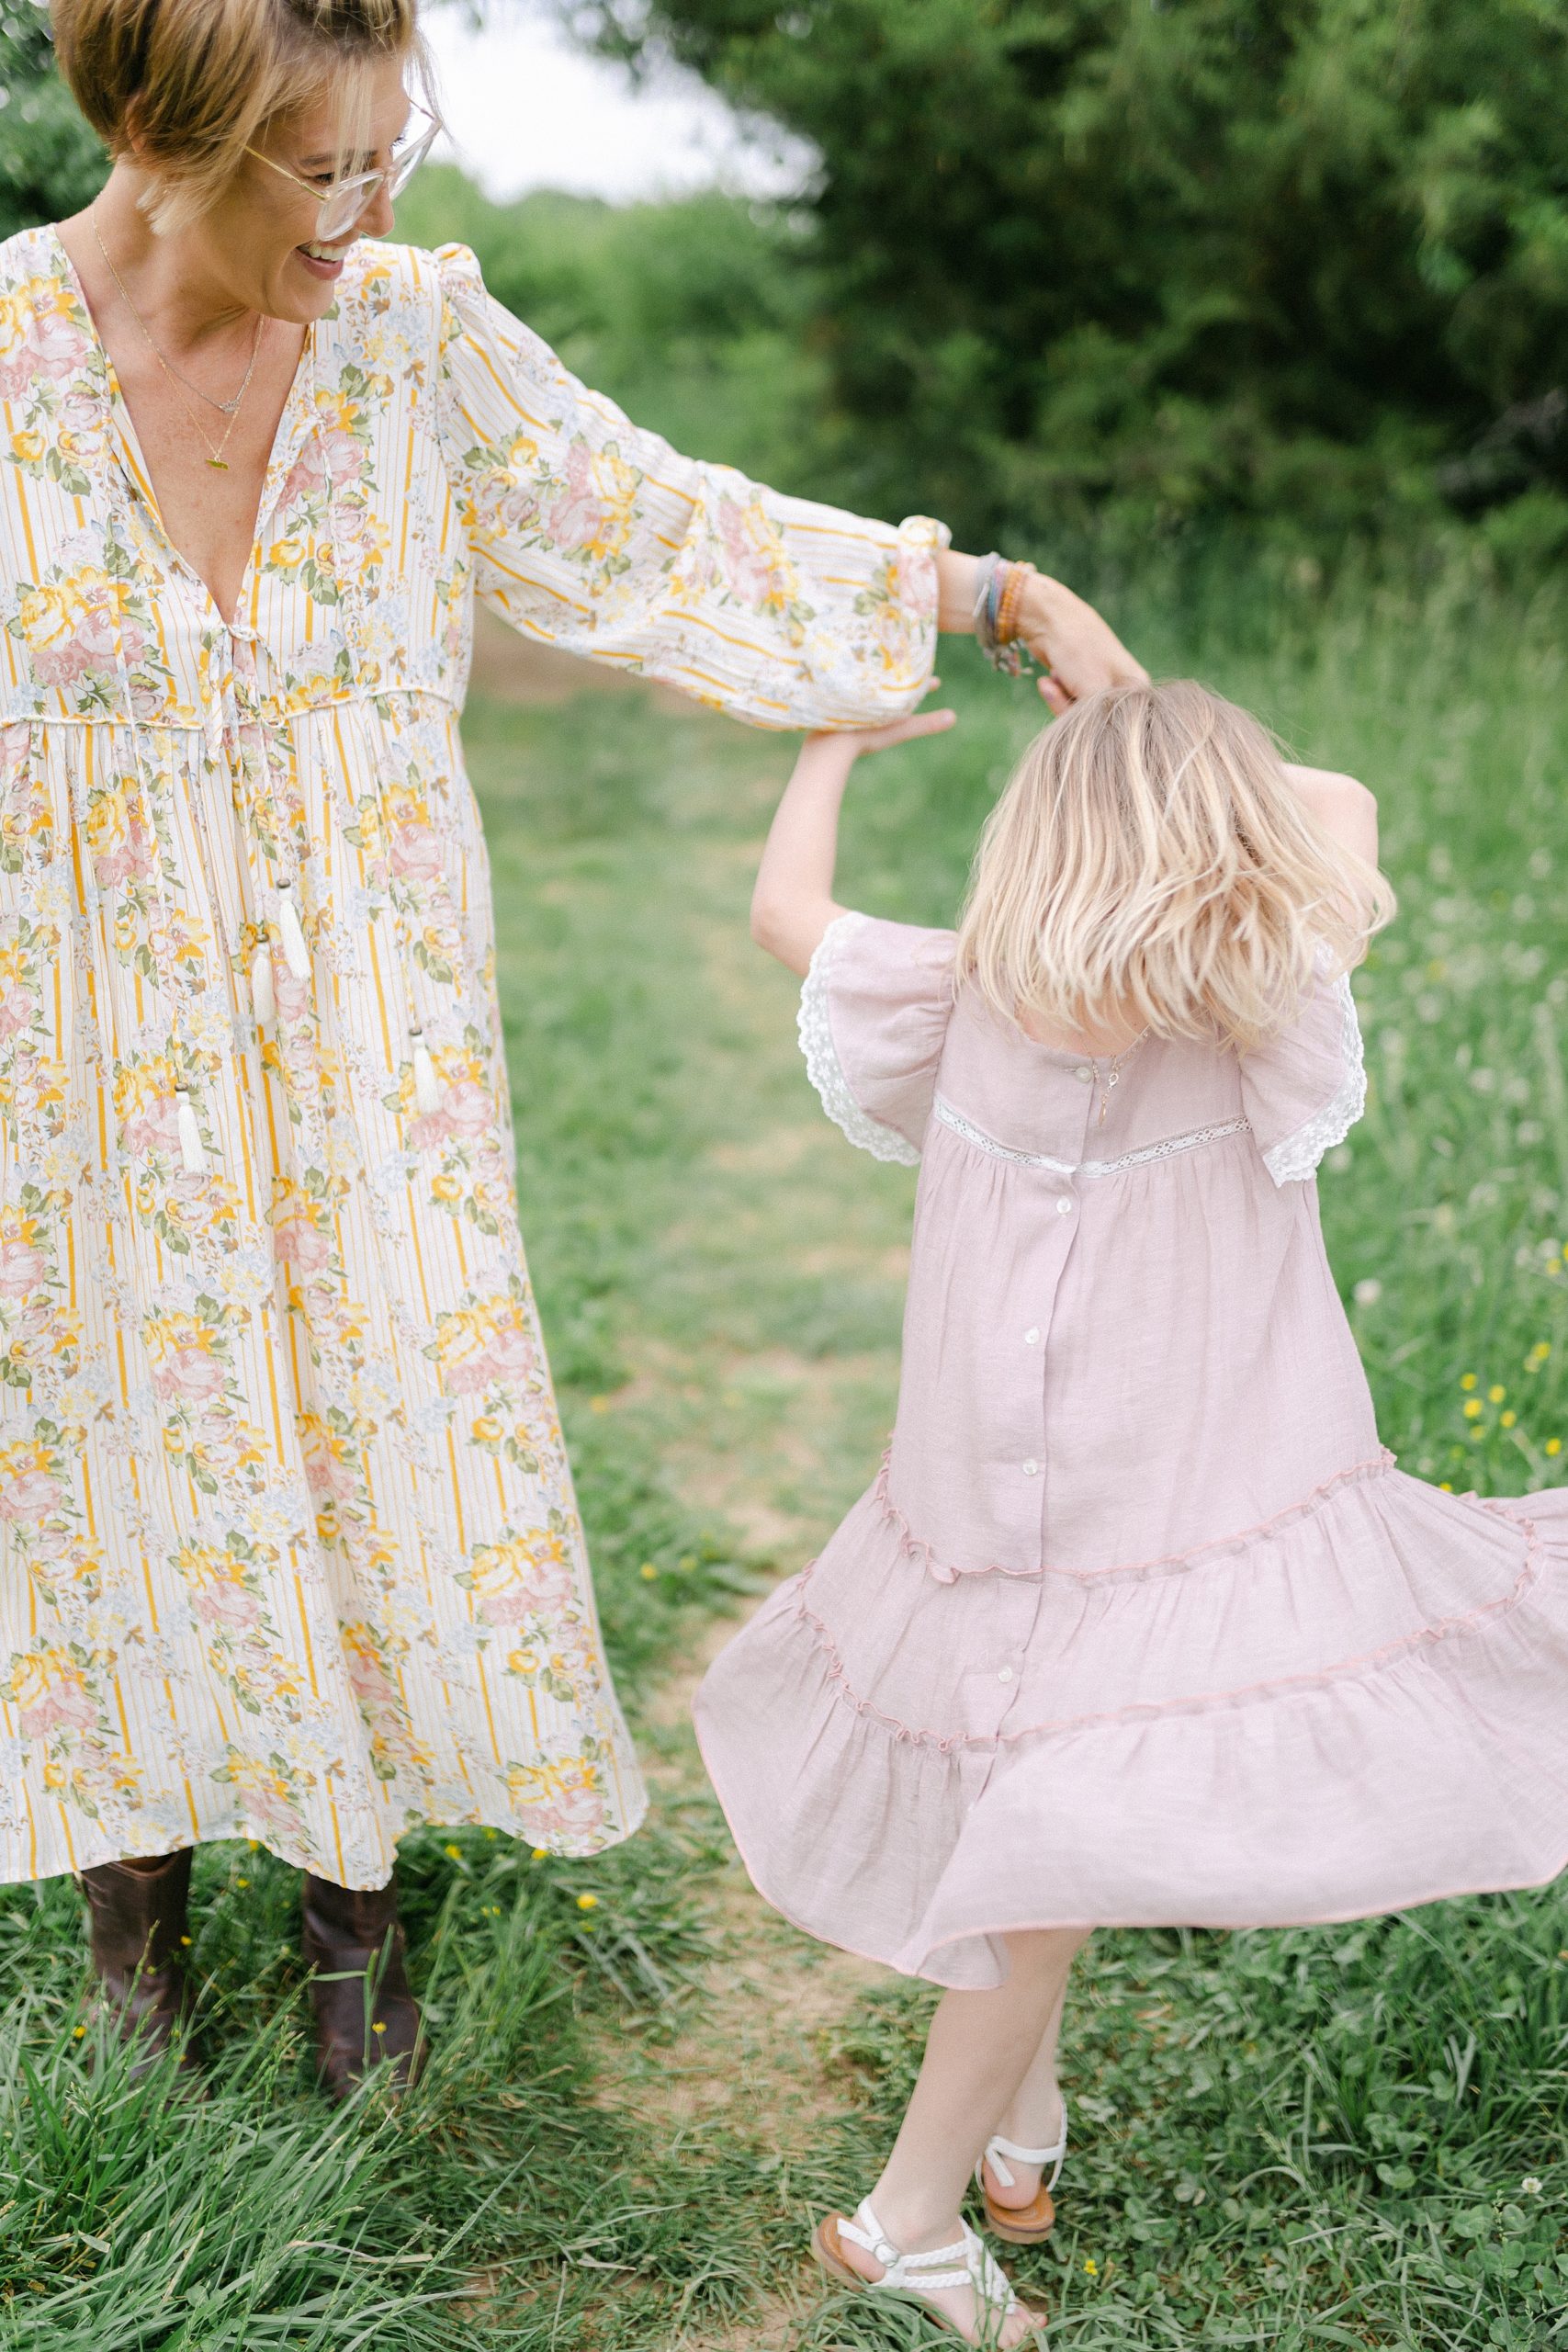 mom twirls little girl around showing off her pink dress